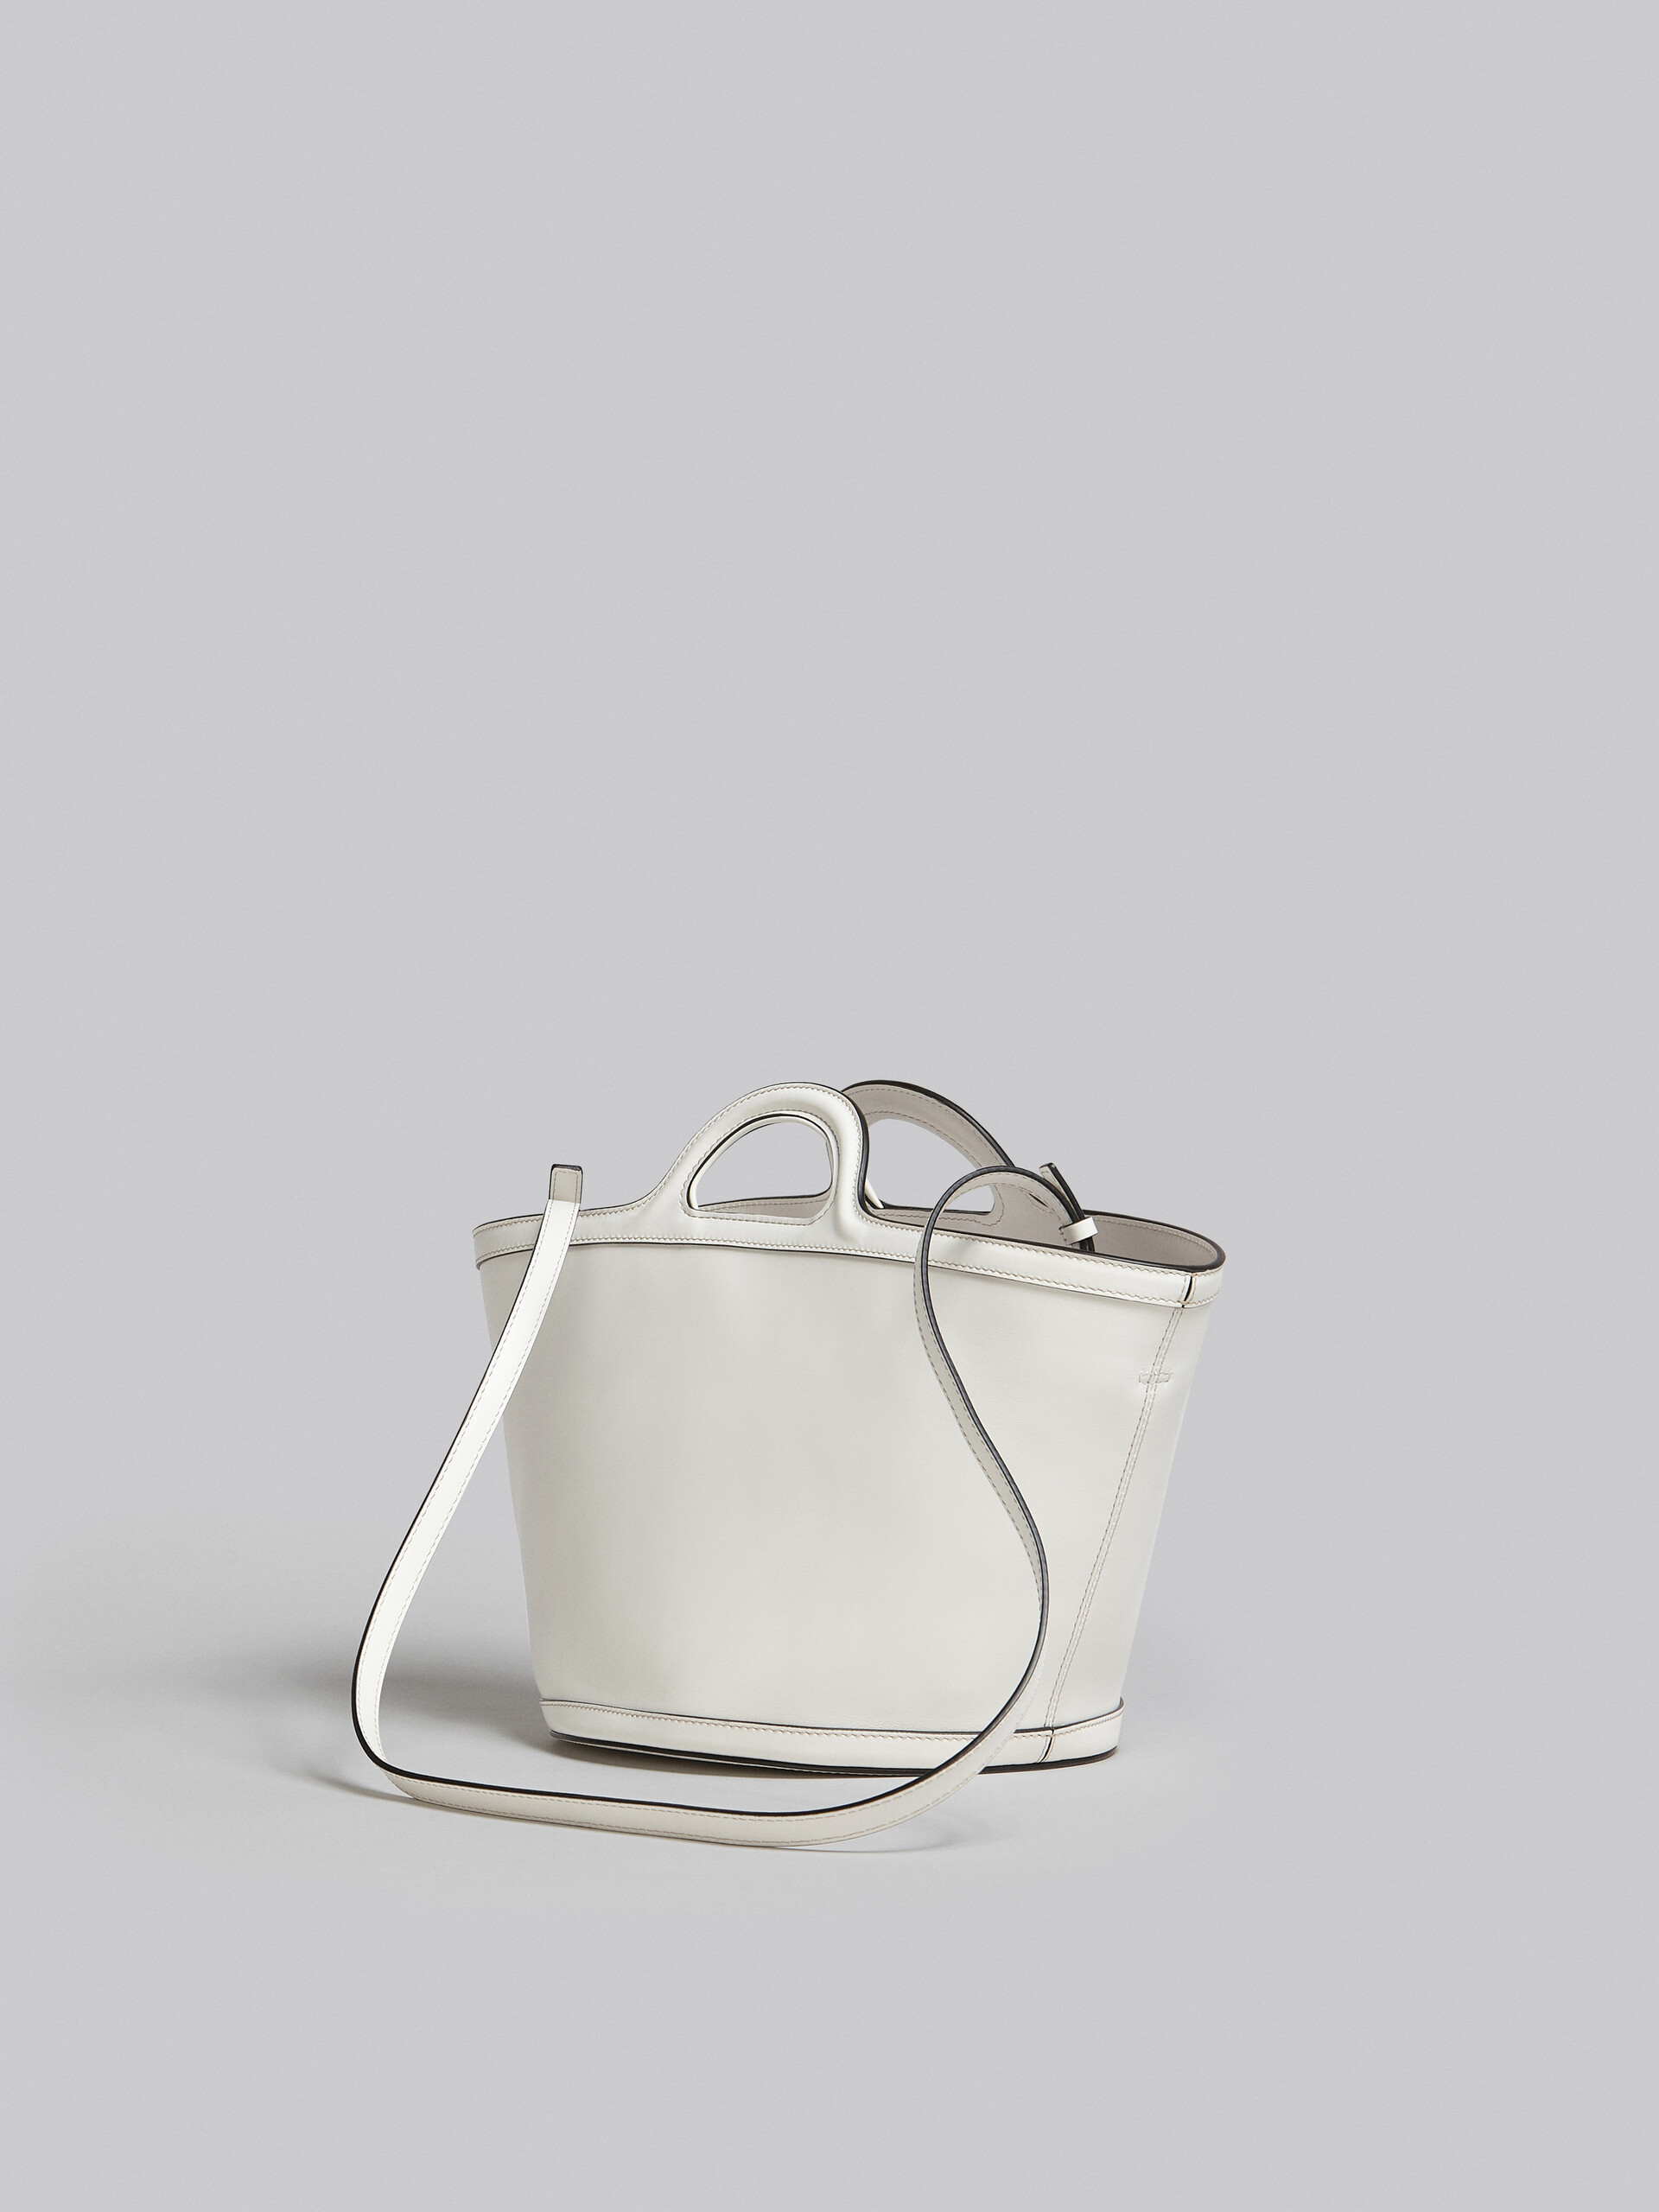 Tropicalia Small Bag in white leather - Handbag - Image 3